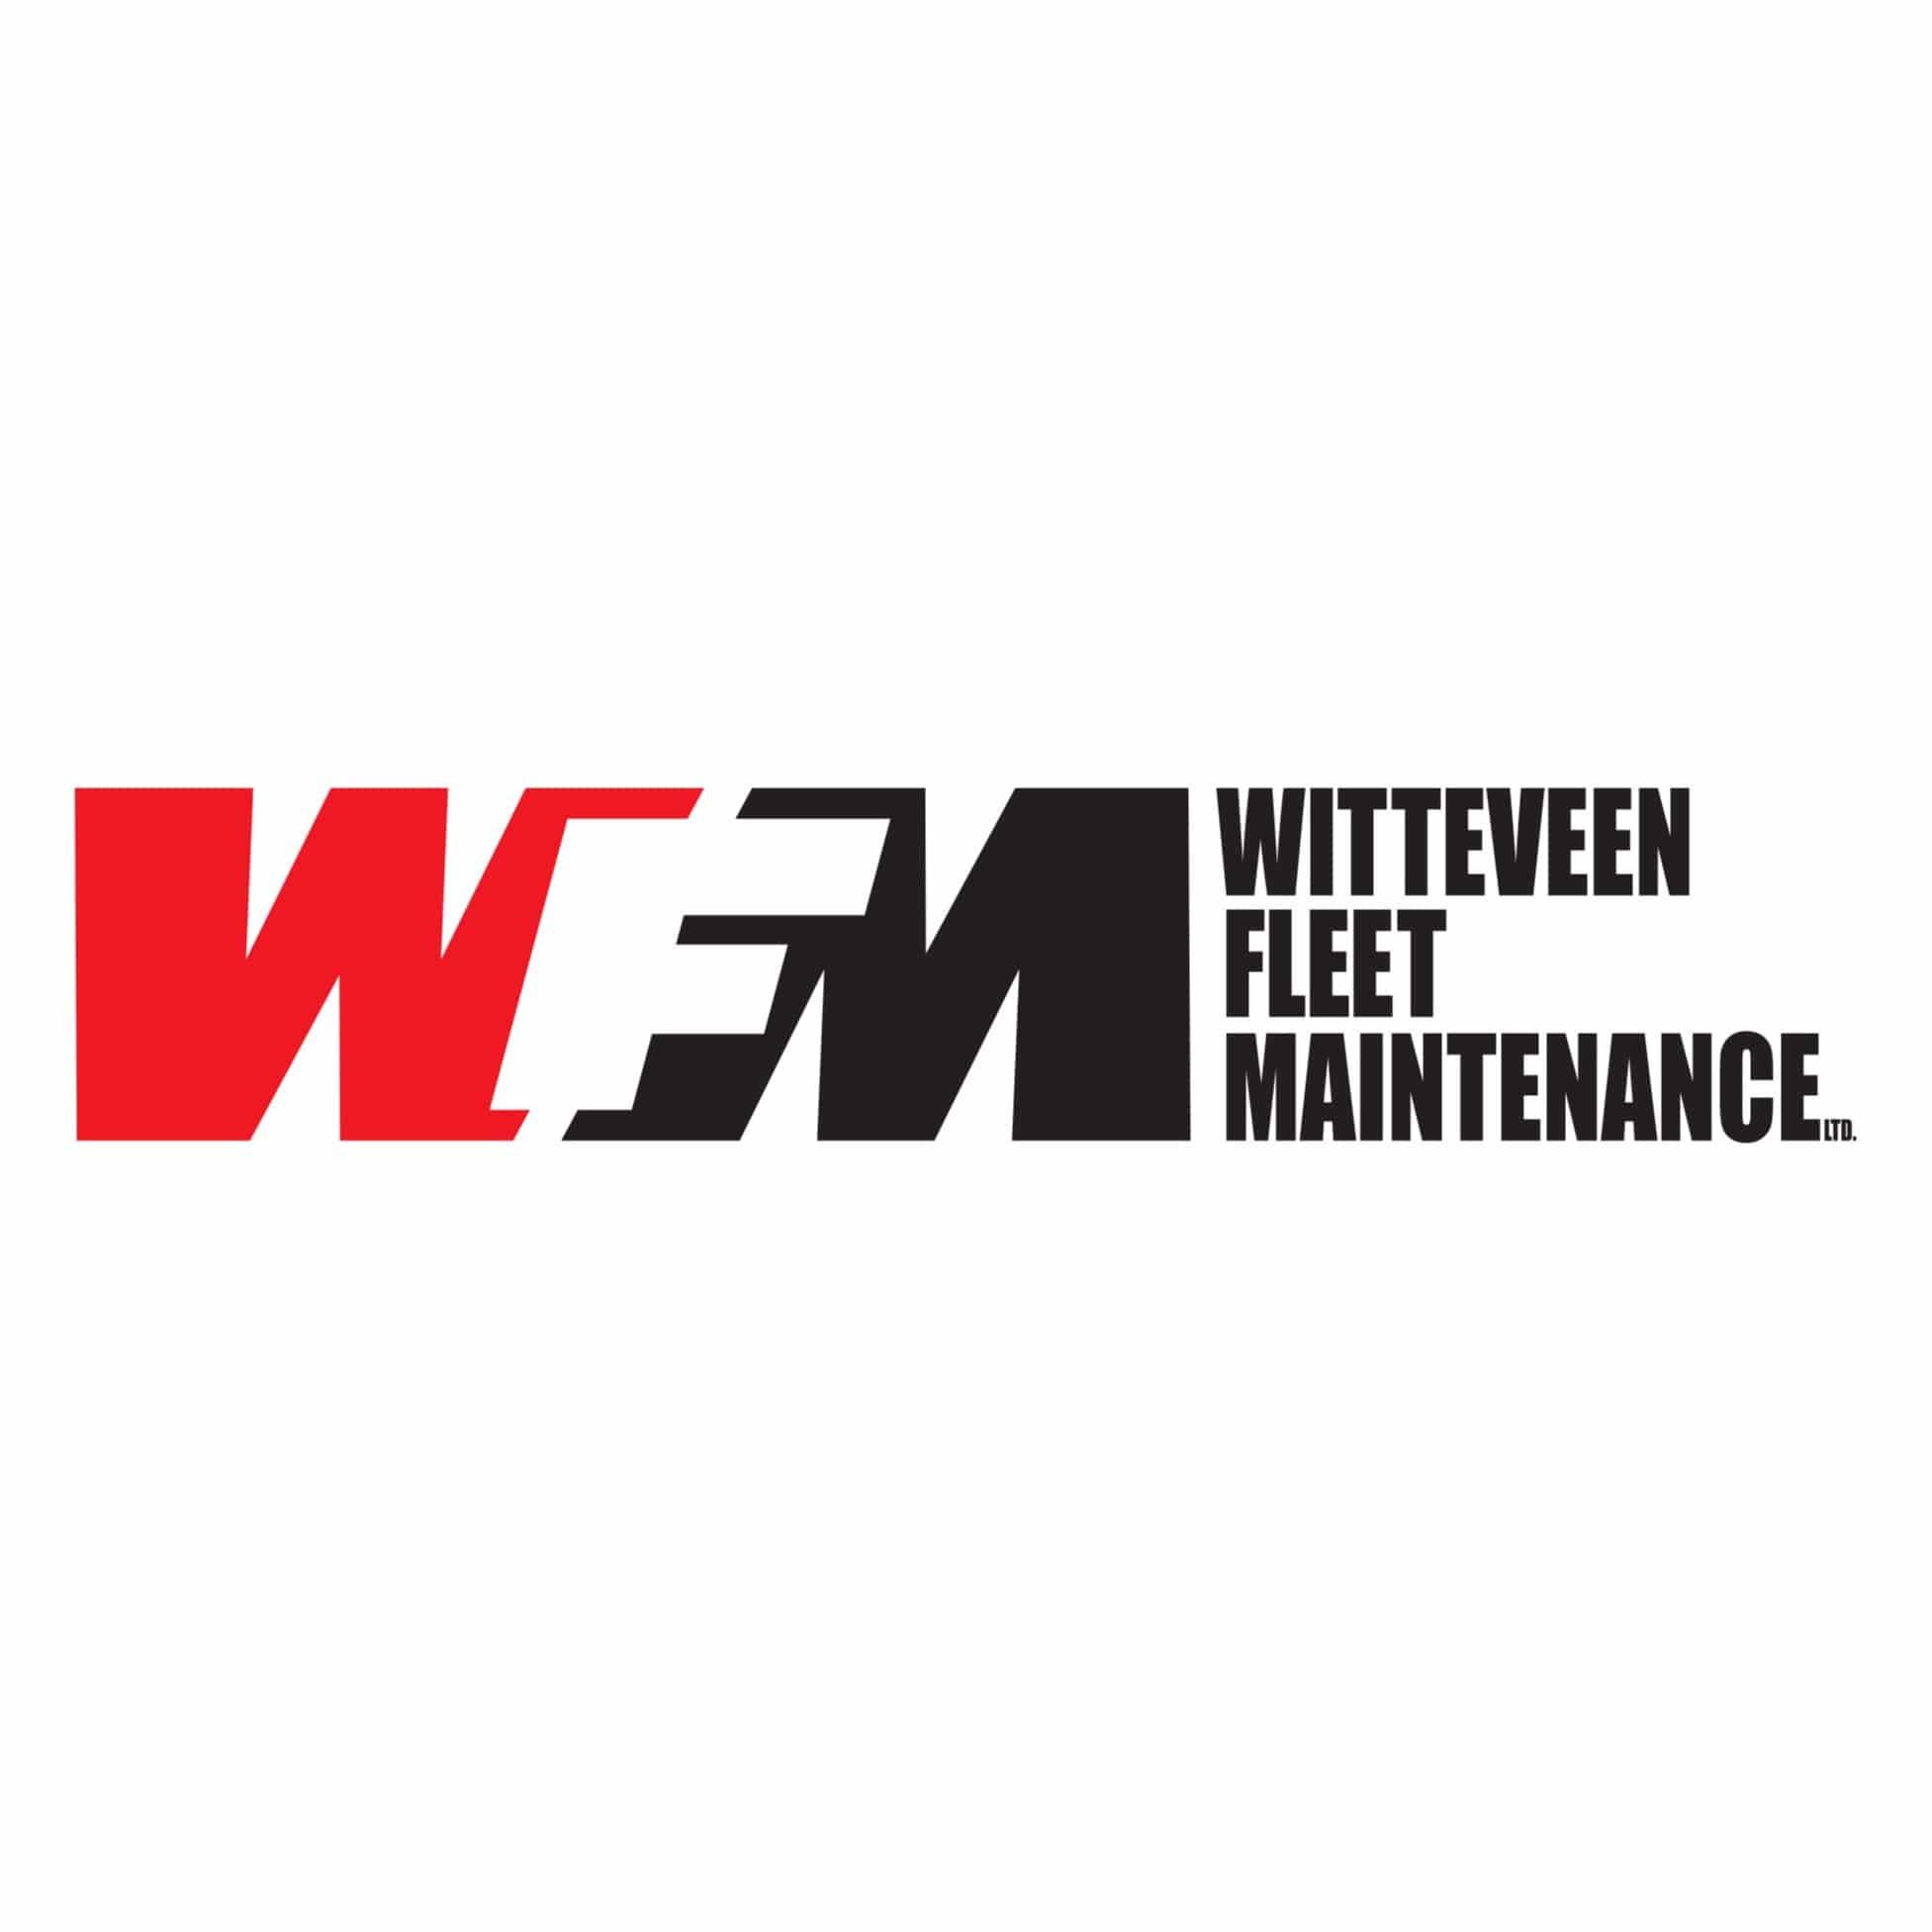 <p>Witteveen Fleet Maintenance</p> logo